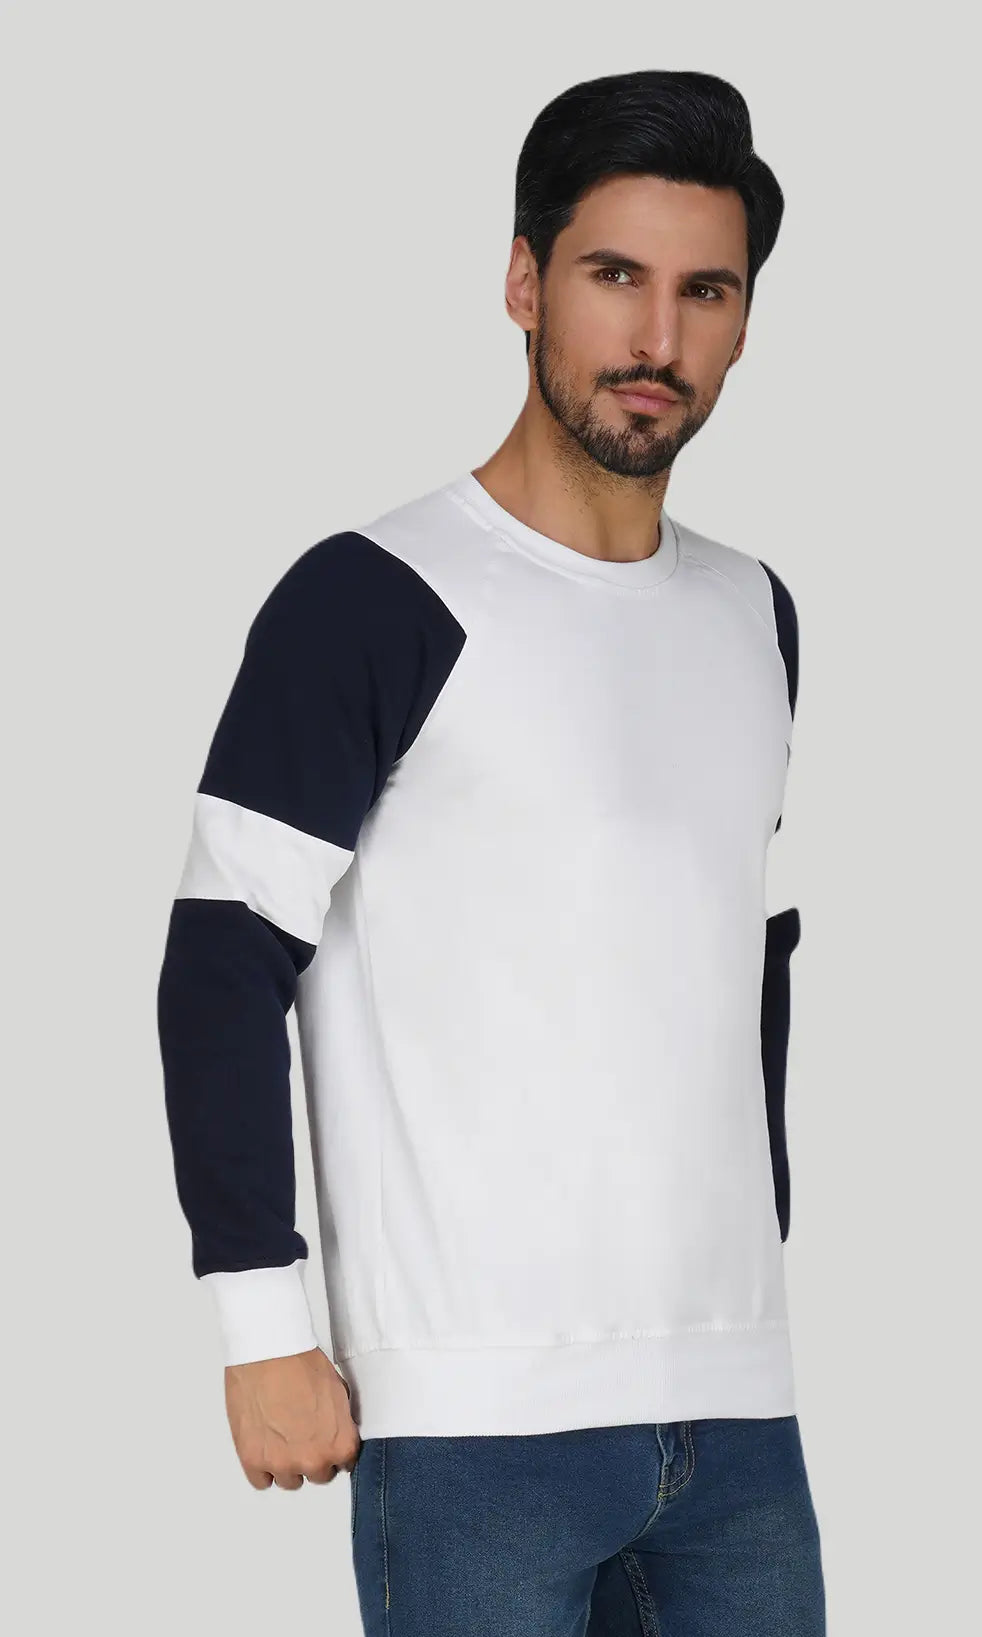 Mebadass Cotton Men's Winterwear ColorBlocked Sweatshirt - White Navy Arm